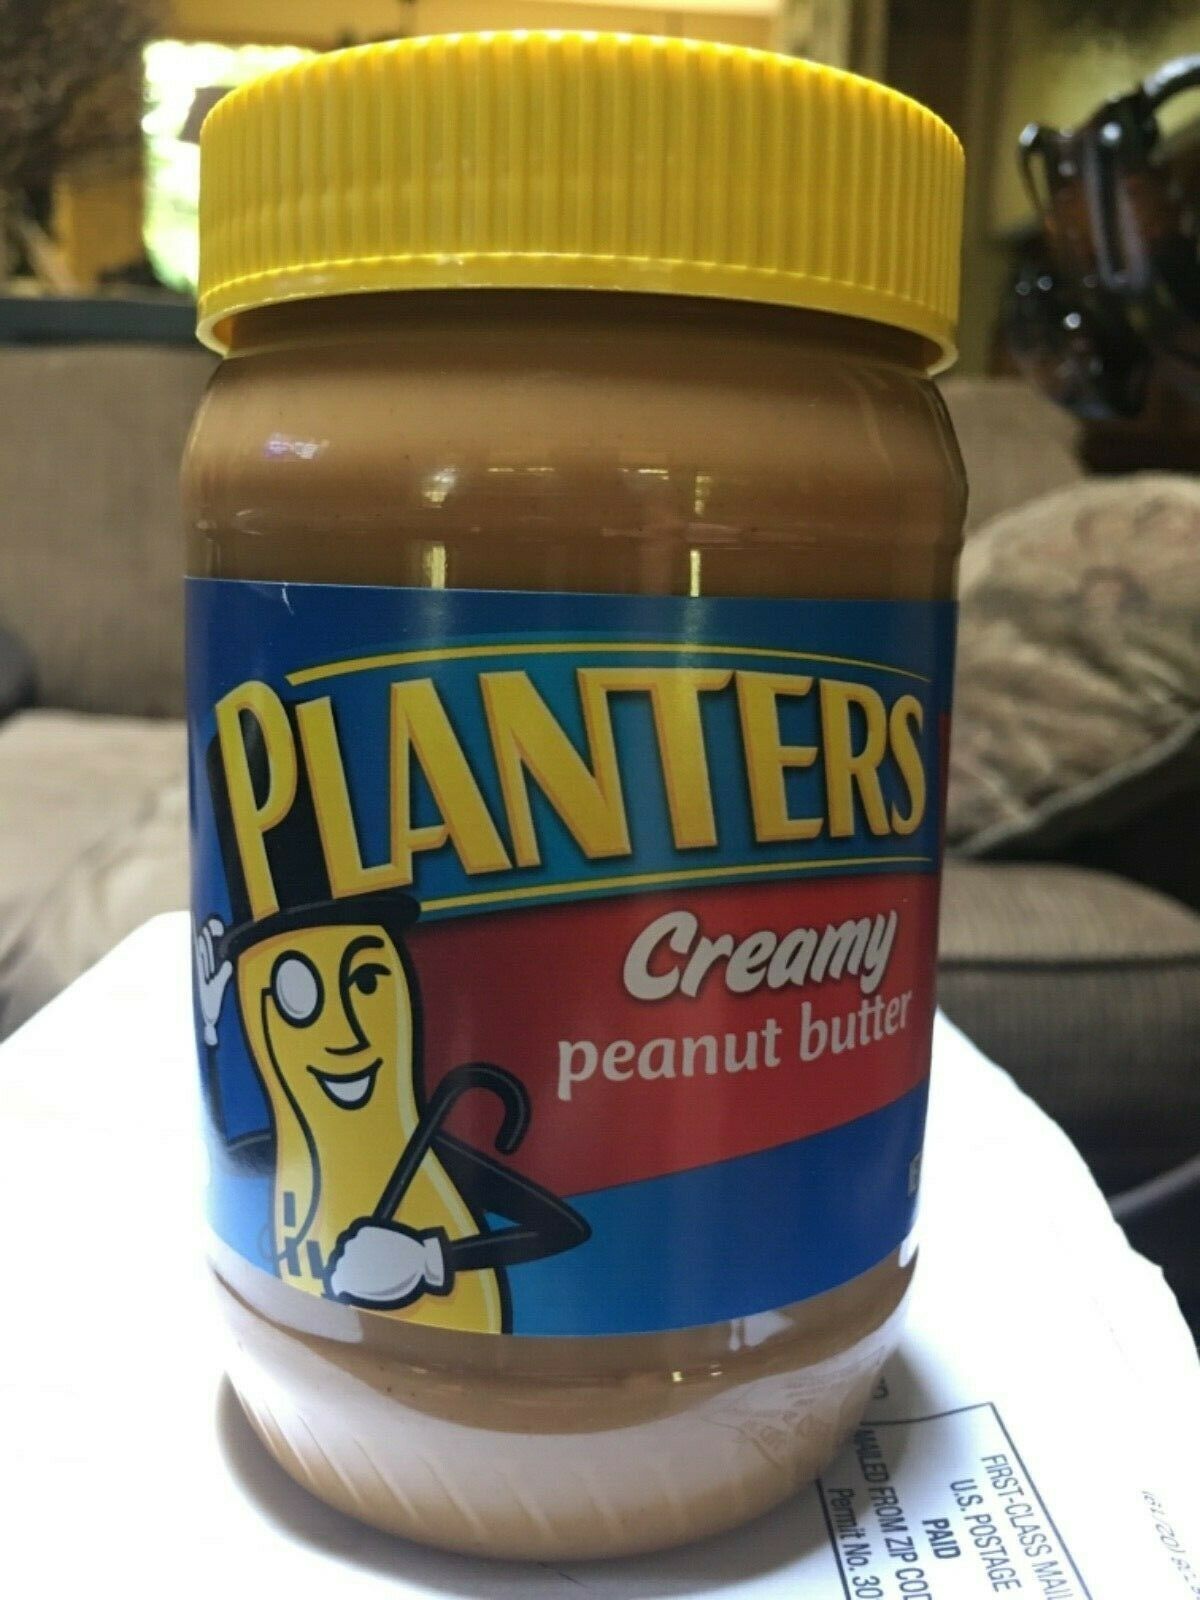 Planters Creamy Peanut Butter, 18 Oz., (510g) Best Before Date Nov 29, 2021